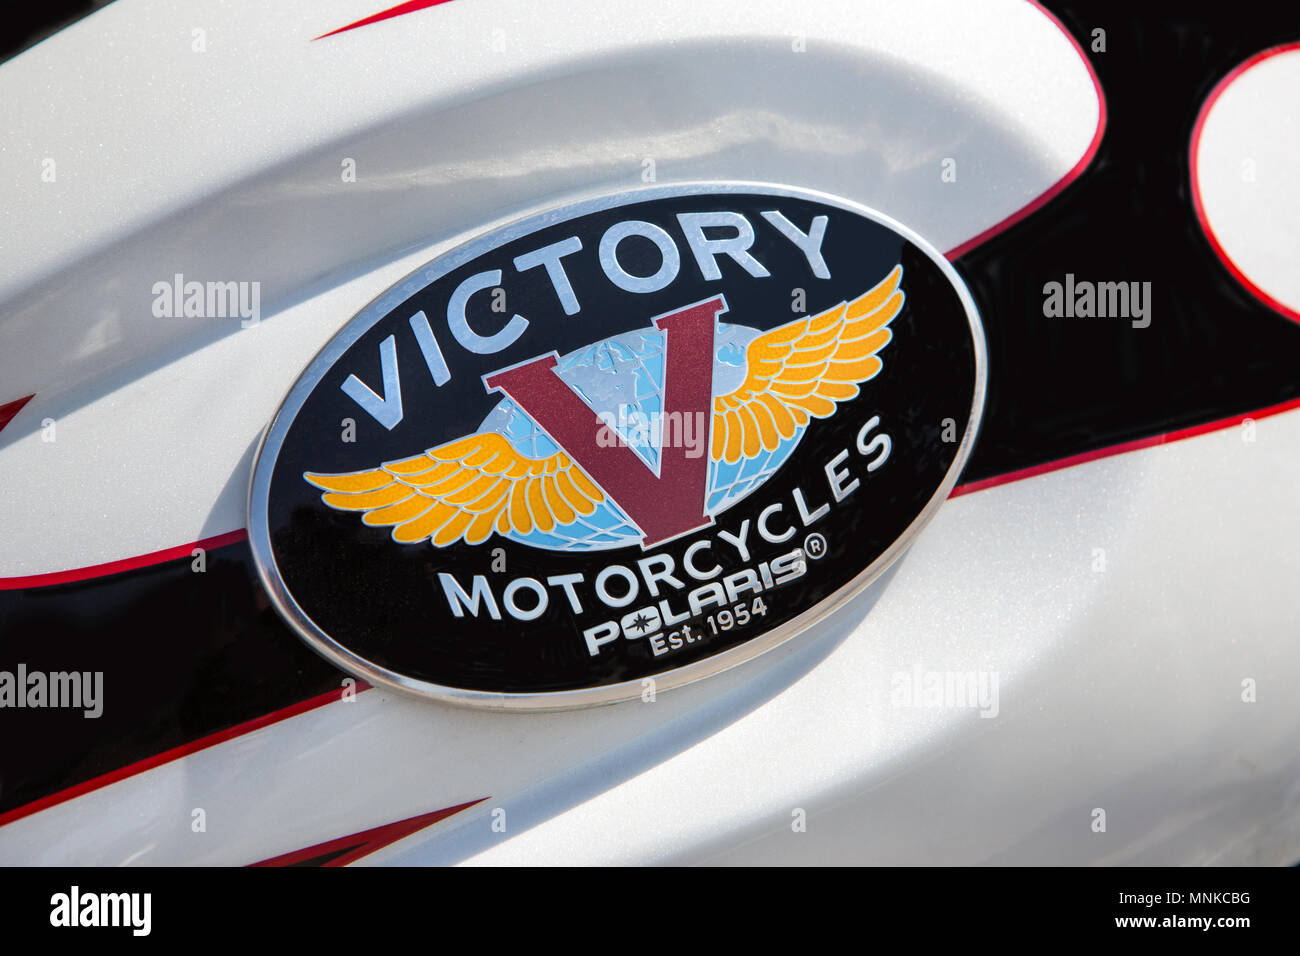 Victory motorcycle logo Stock Photo